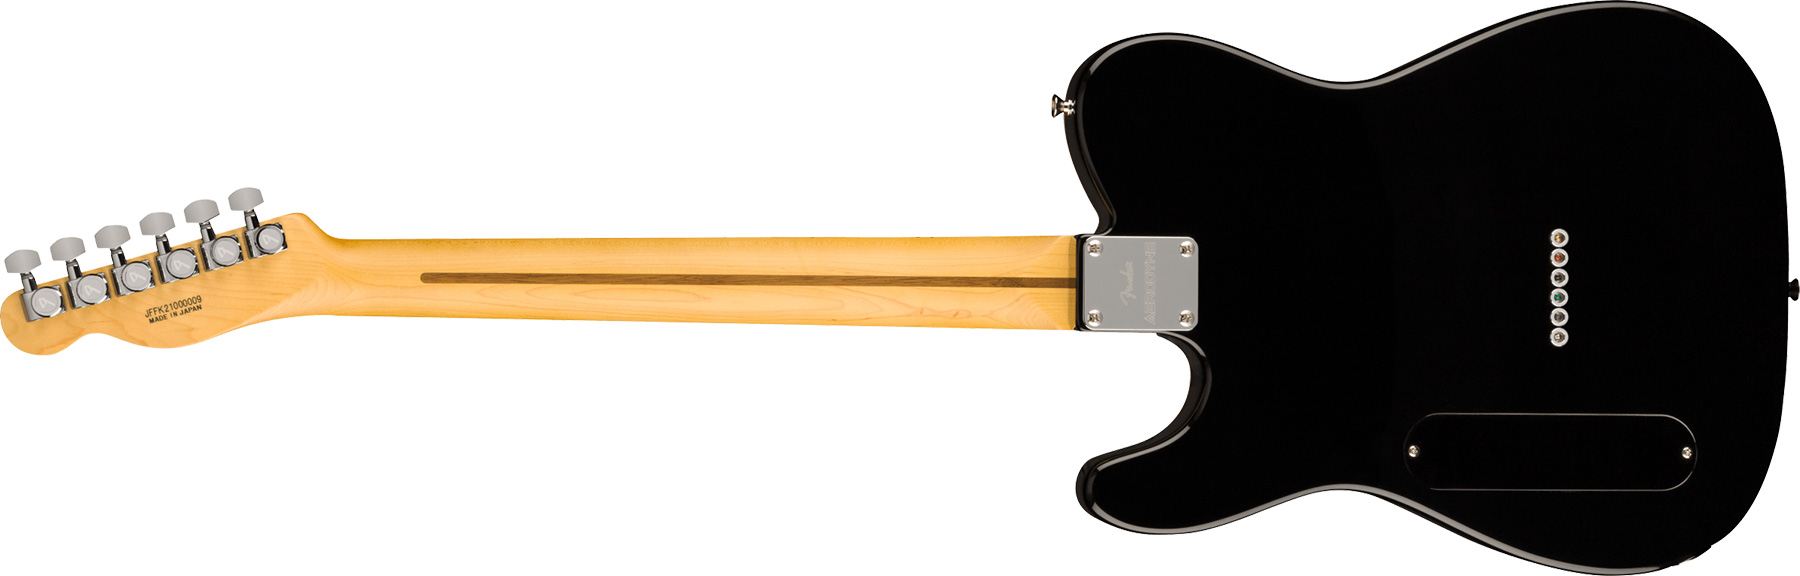 Fender Tele Aerodyne Special Jap 2s Ht Mn - Hot Rod Burst - Guitarra eléctrica con forma de tel - Variation 1